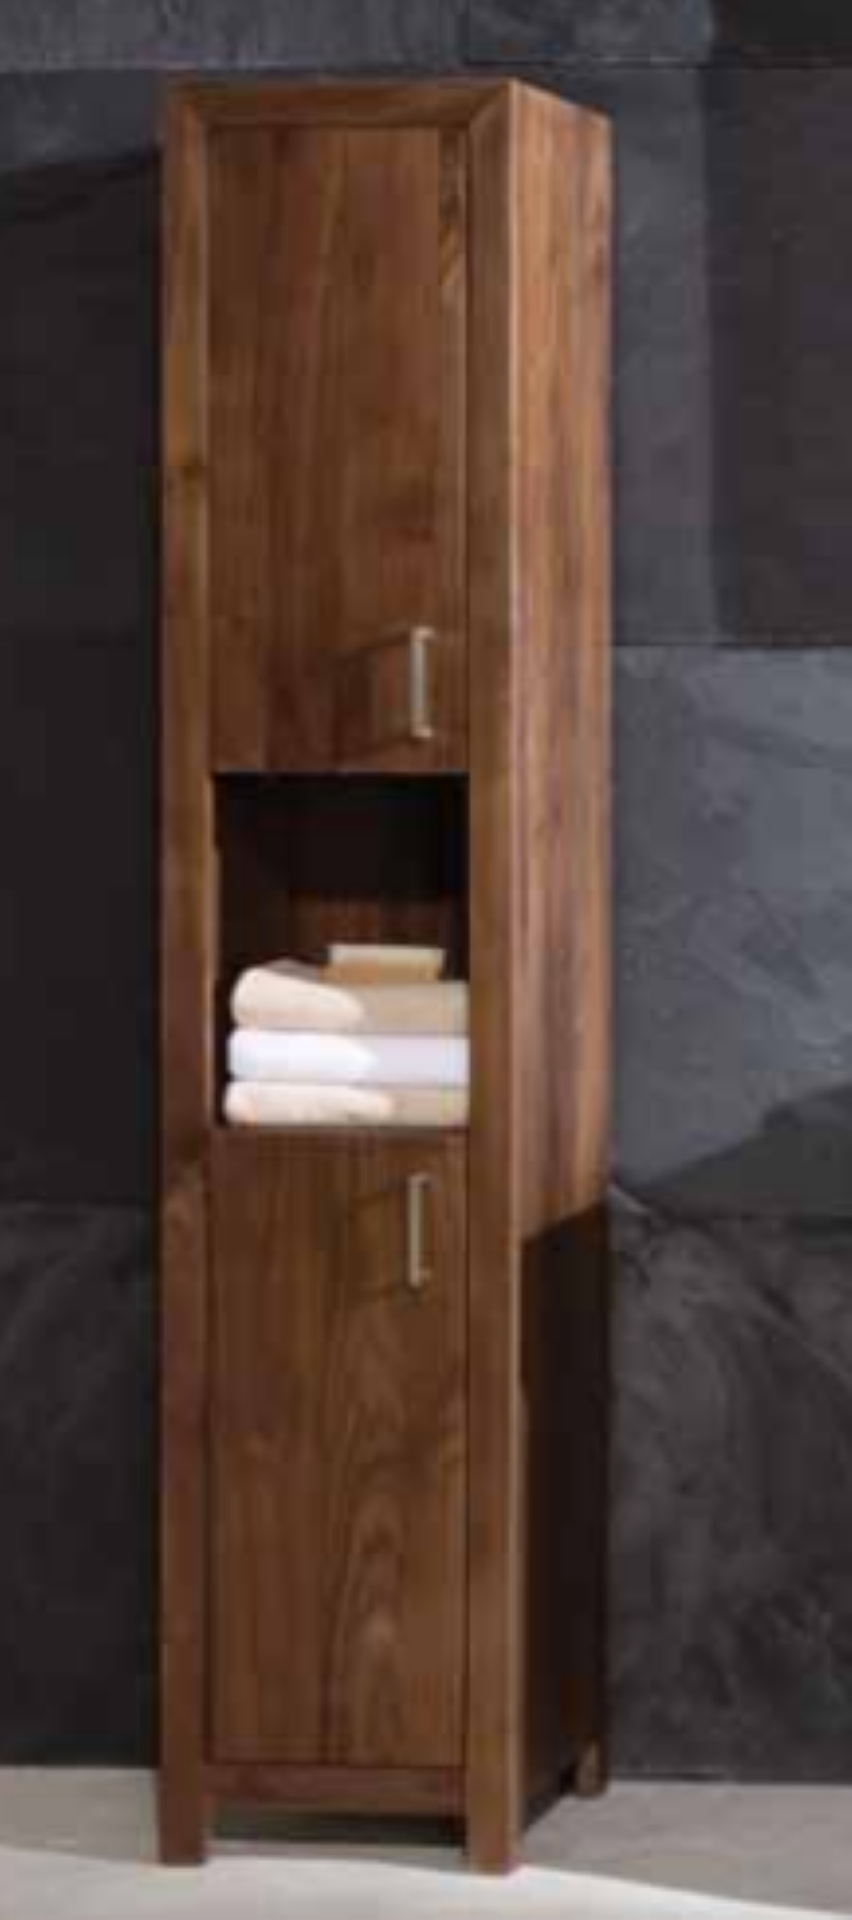 1 x Stonearth Freestanding Tallboy Bathroom Storage Cabinet - American Solid Walnut - RRP £996! - Image 6 of 14